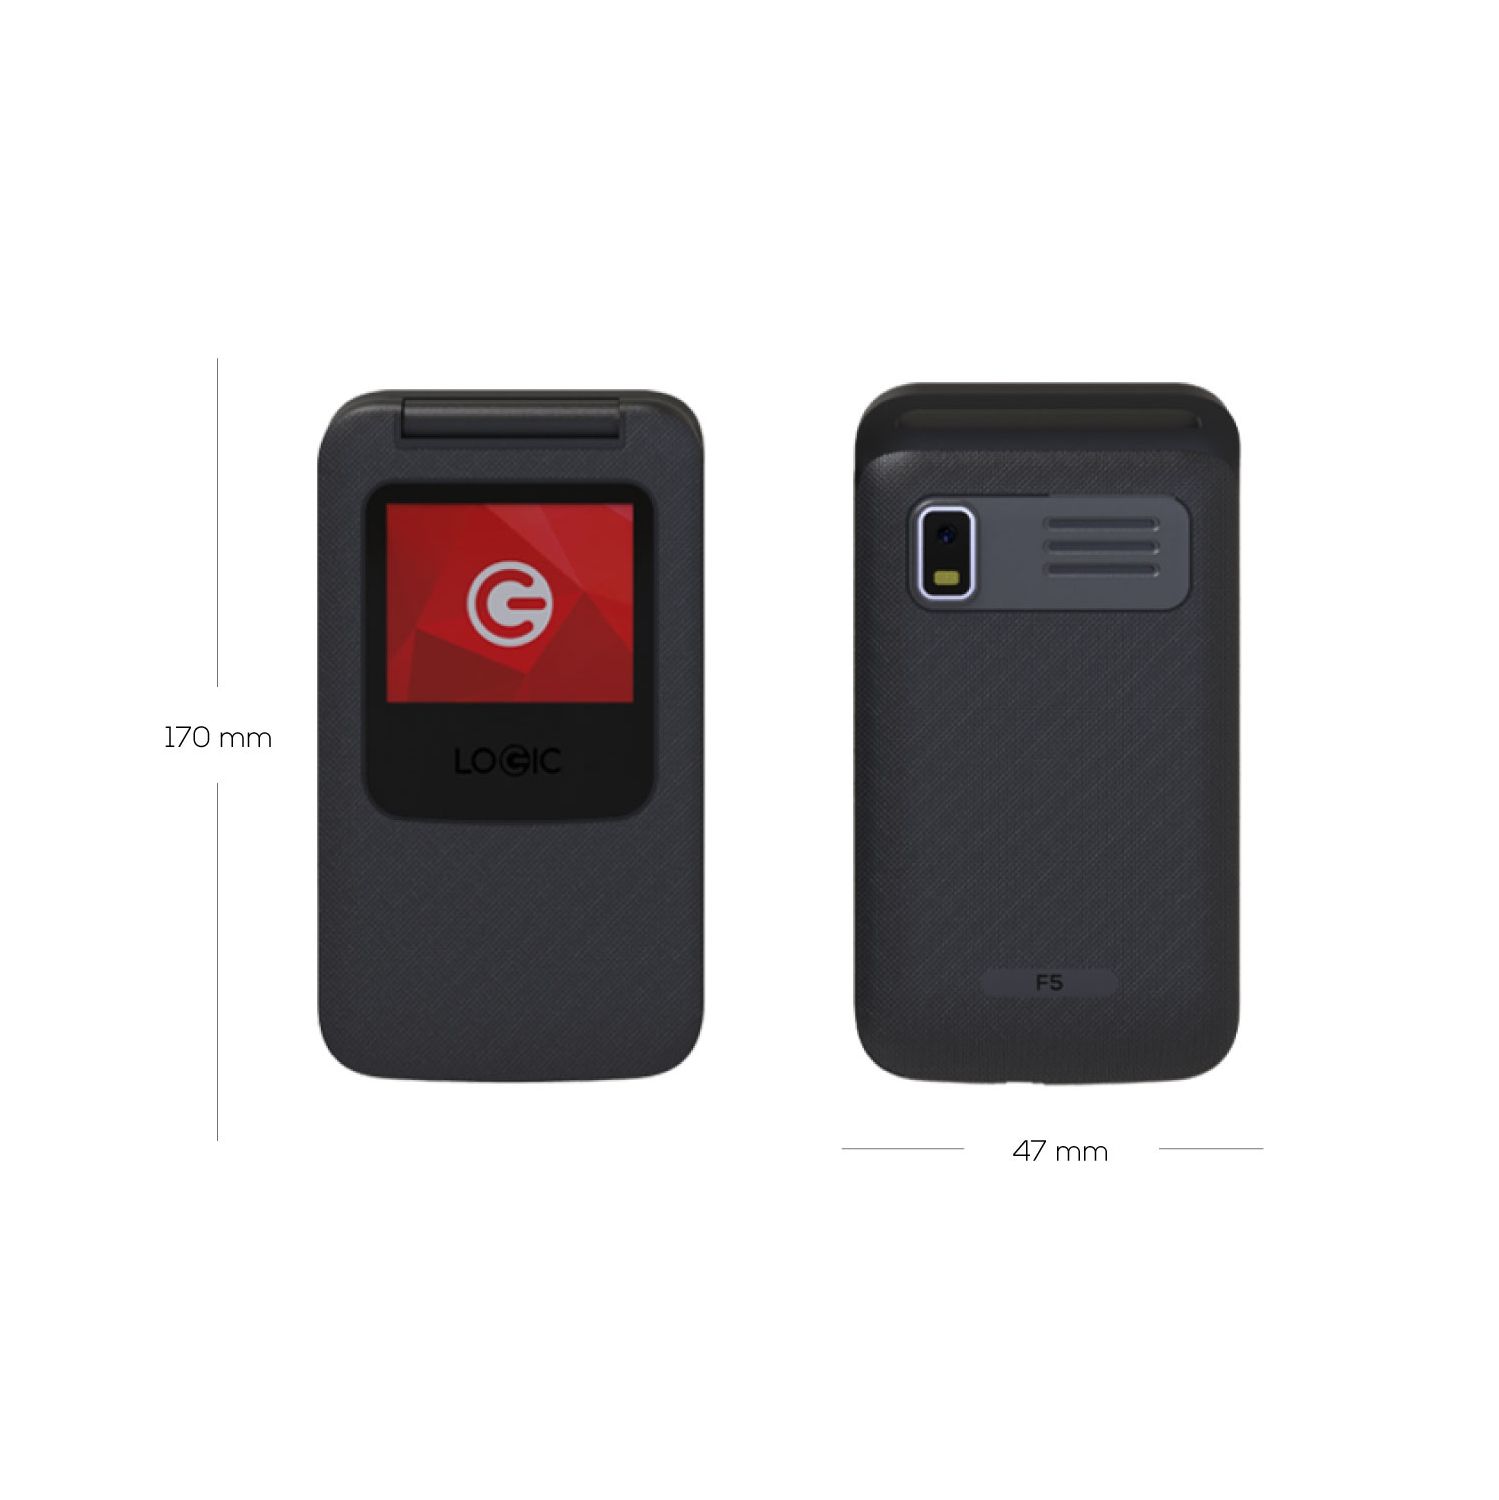 Logic F5 Flip Phone - Unlocked For ONLY Chatr, Rogers & Fido - International Model - 2G Quad Band - VGA Camera + Flash - 600mAh Li-ion Battery - Micro USB Connector - Brand New Sealed - Grey